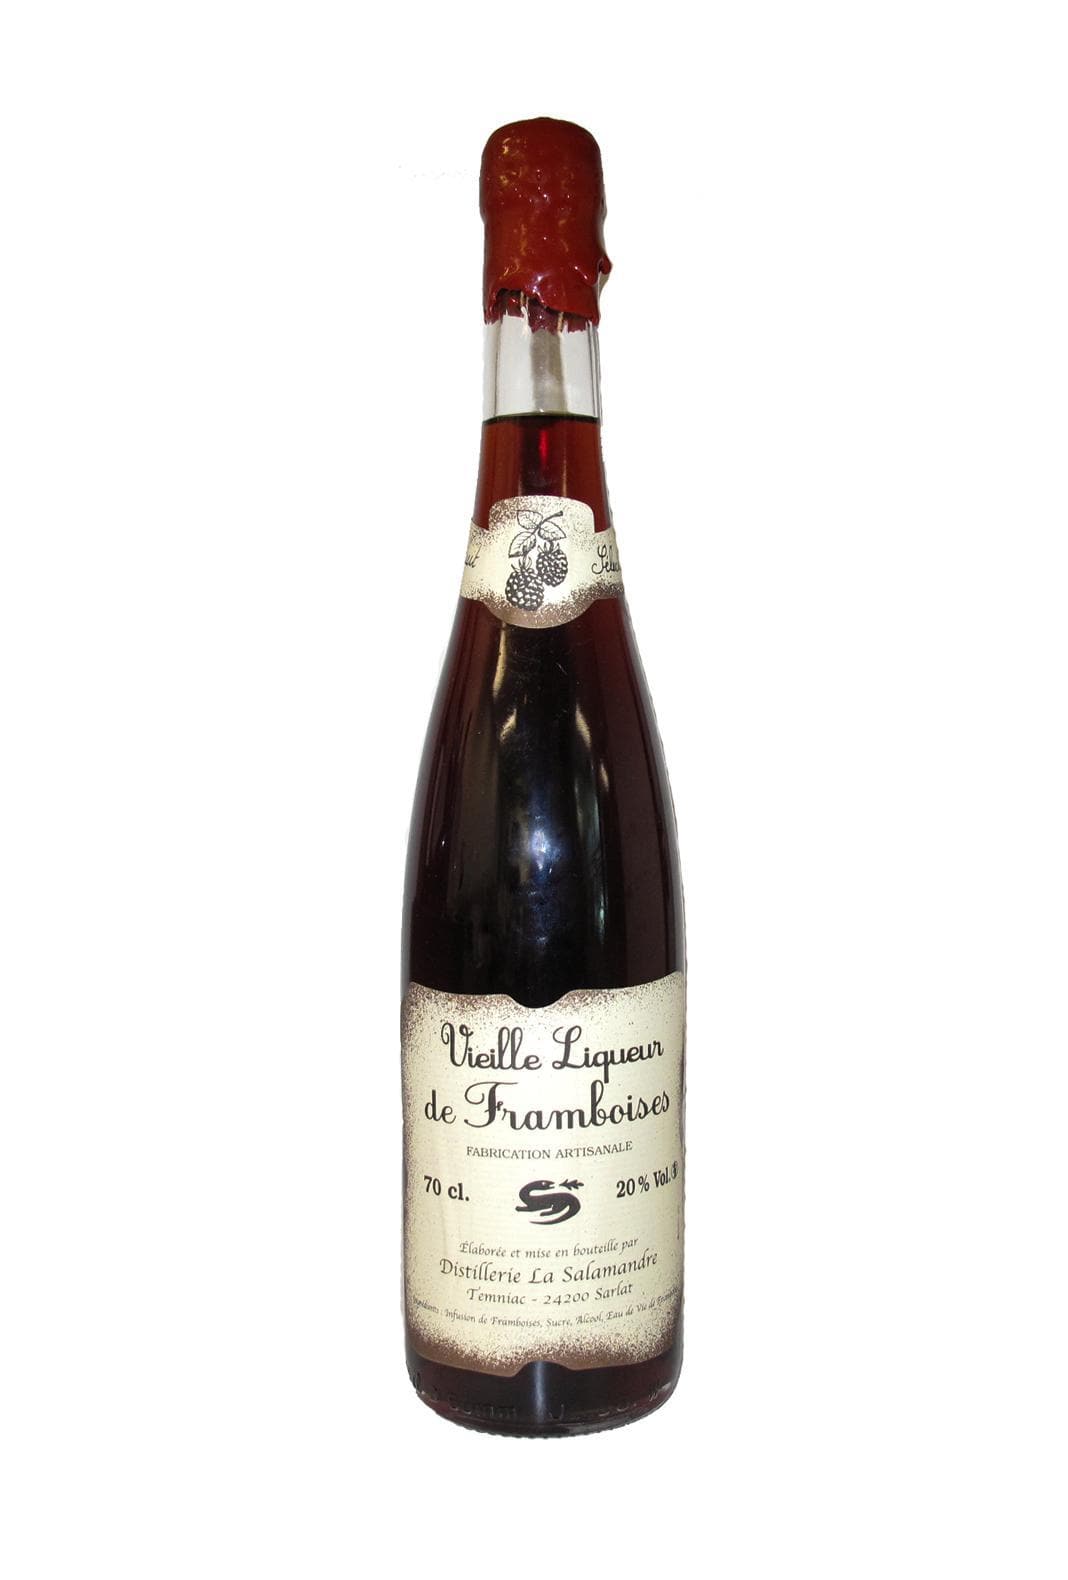 Salamandre Vieille Liqueur de Framboises (Raspberry) 20% 700ml | Liquor & Spirits | Shop online at Spirits of France